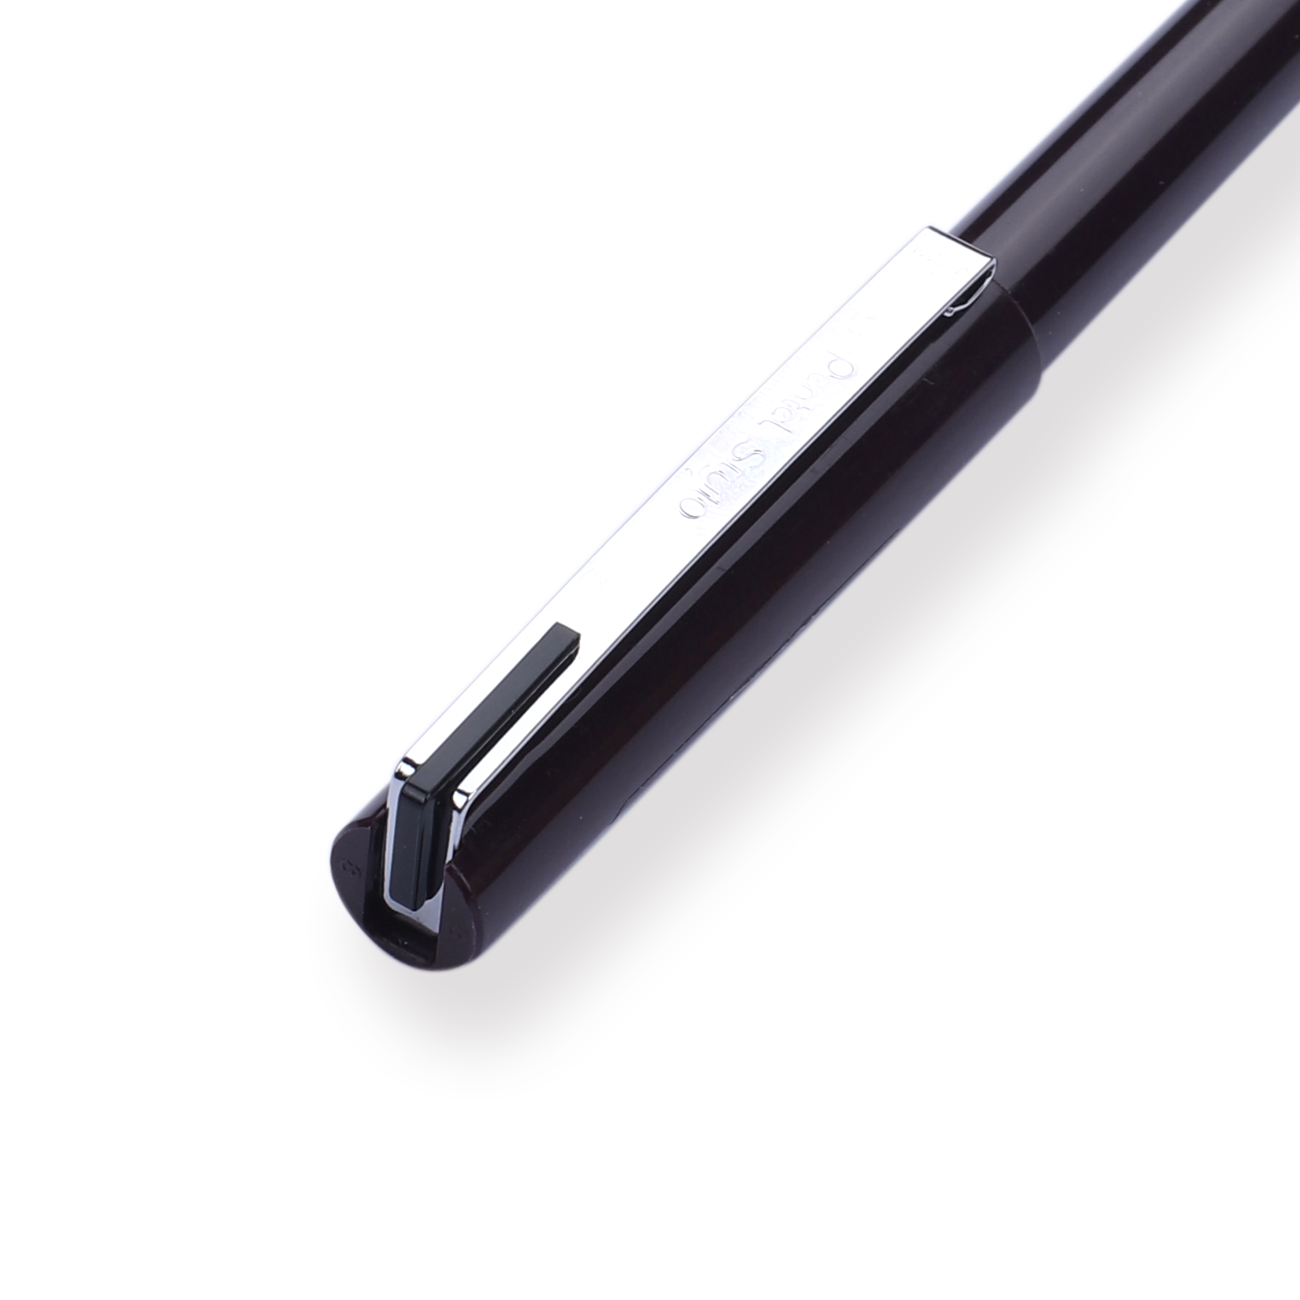 Pentel Stylo Sketch Pen - 0.5 mm - Black - Stationery Pal